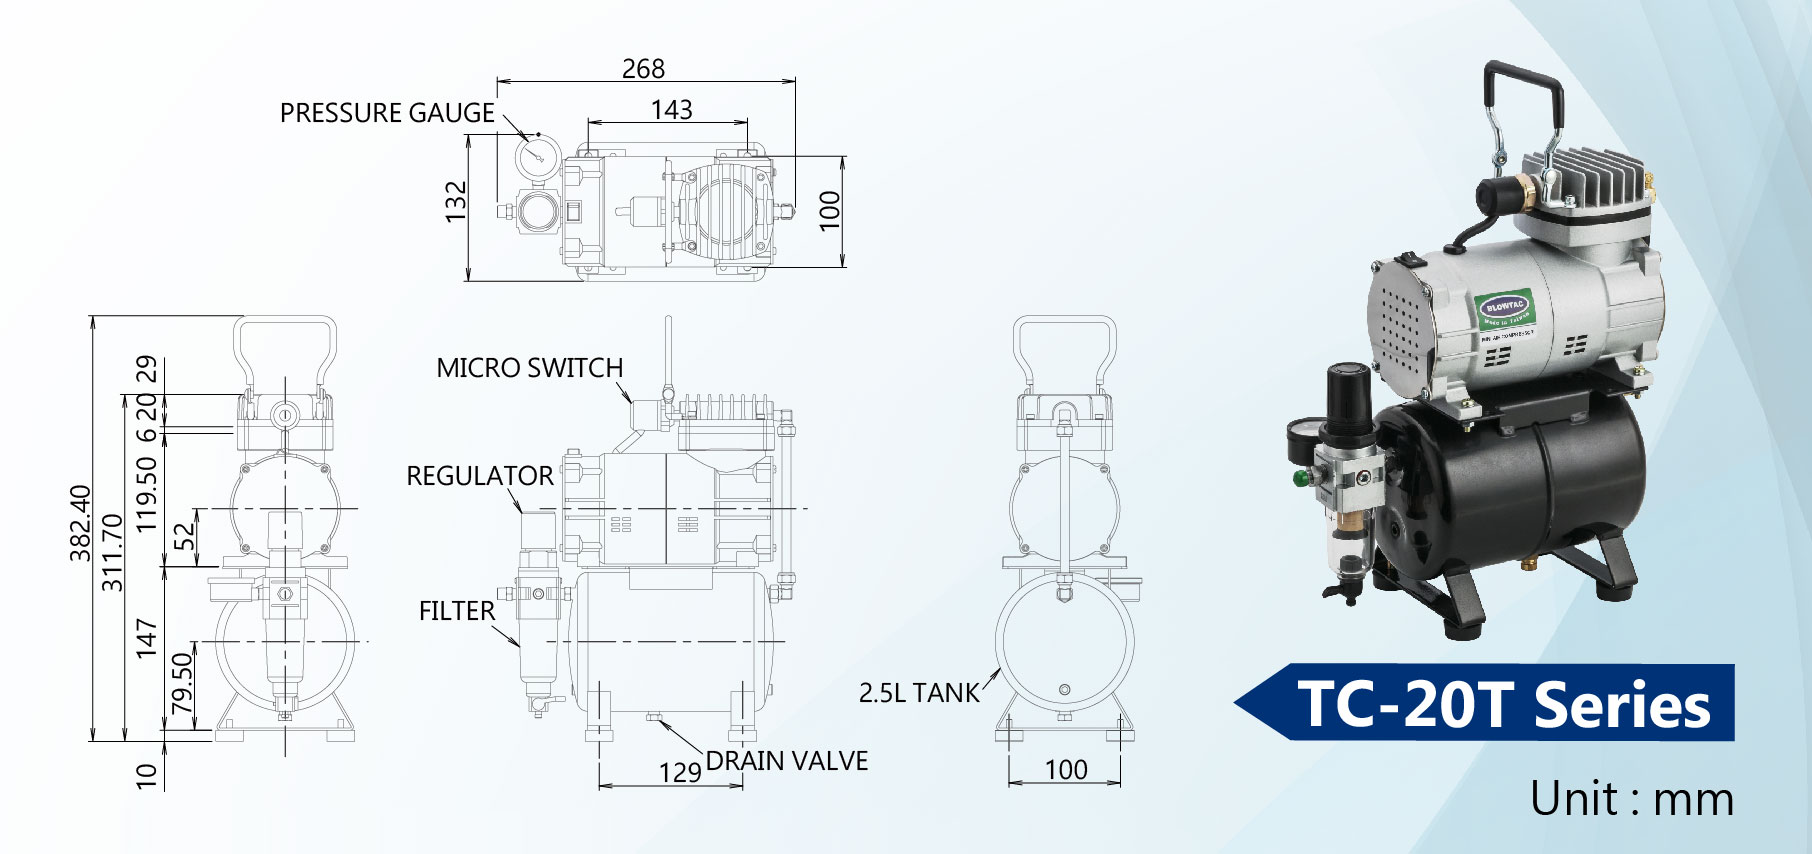 TC-20T Series Mini Air Compressors Dimension